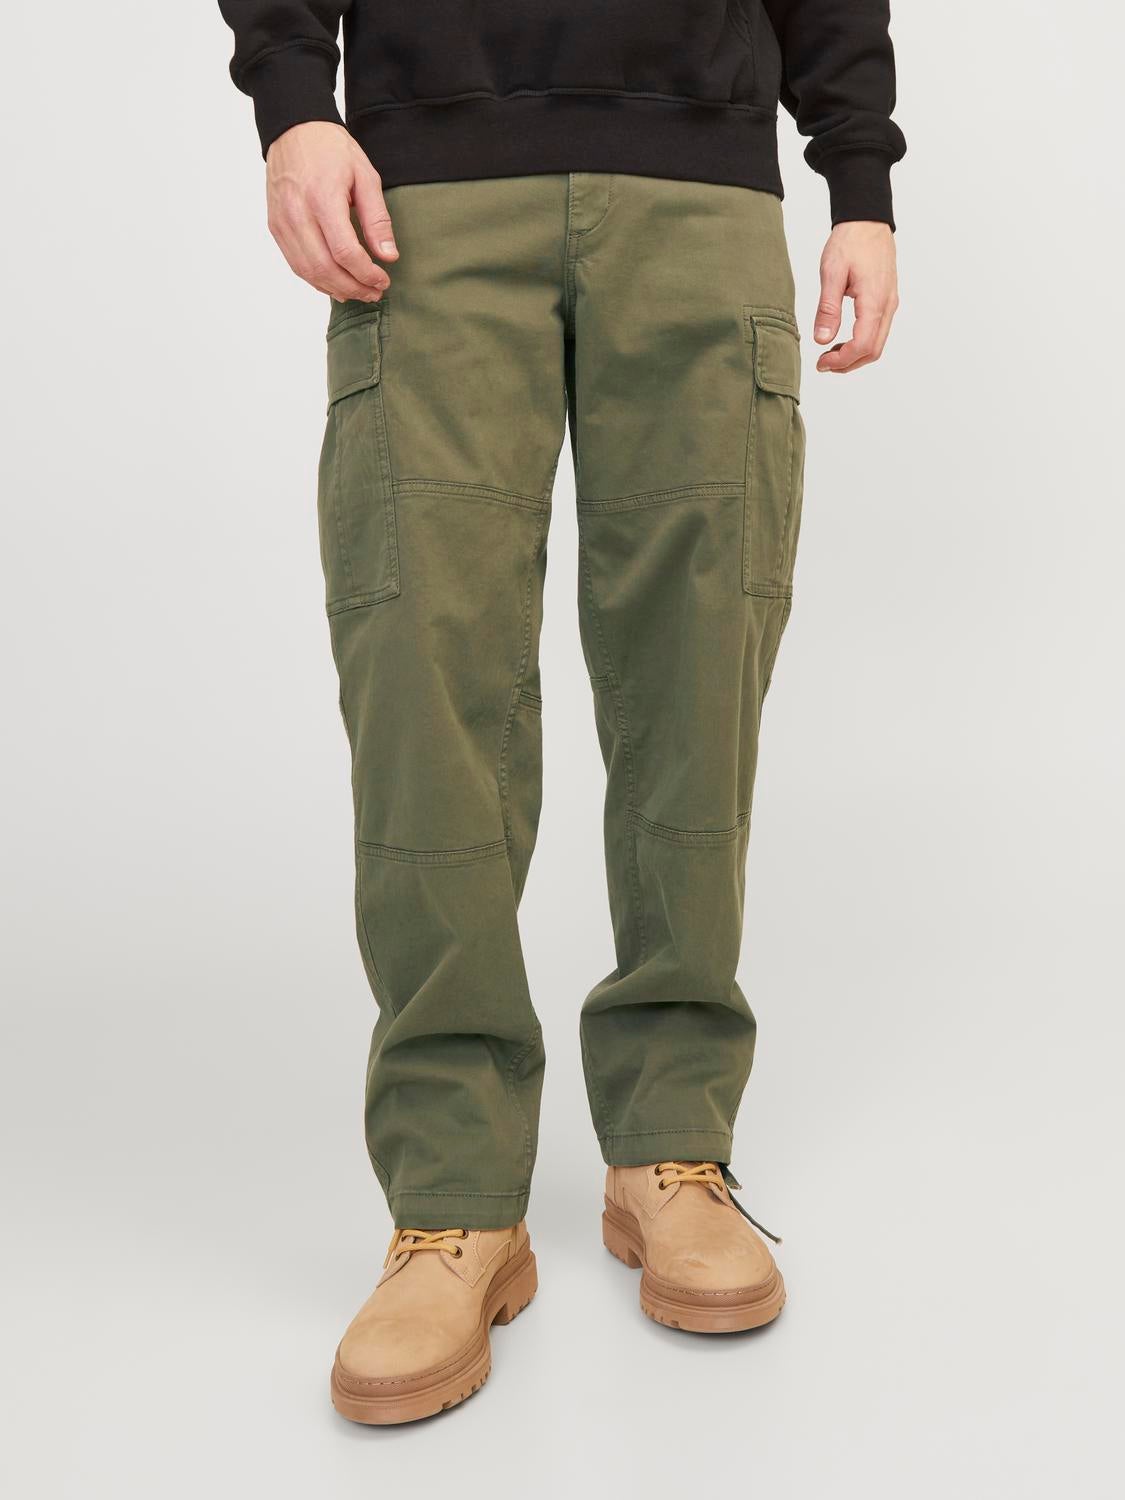 Men's Cargo Khaki Pants | Khaki Pants Side Pocket | Men's Streetwear Pants  - Streetwear - Aliexpress